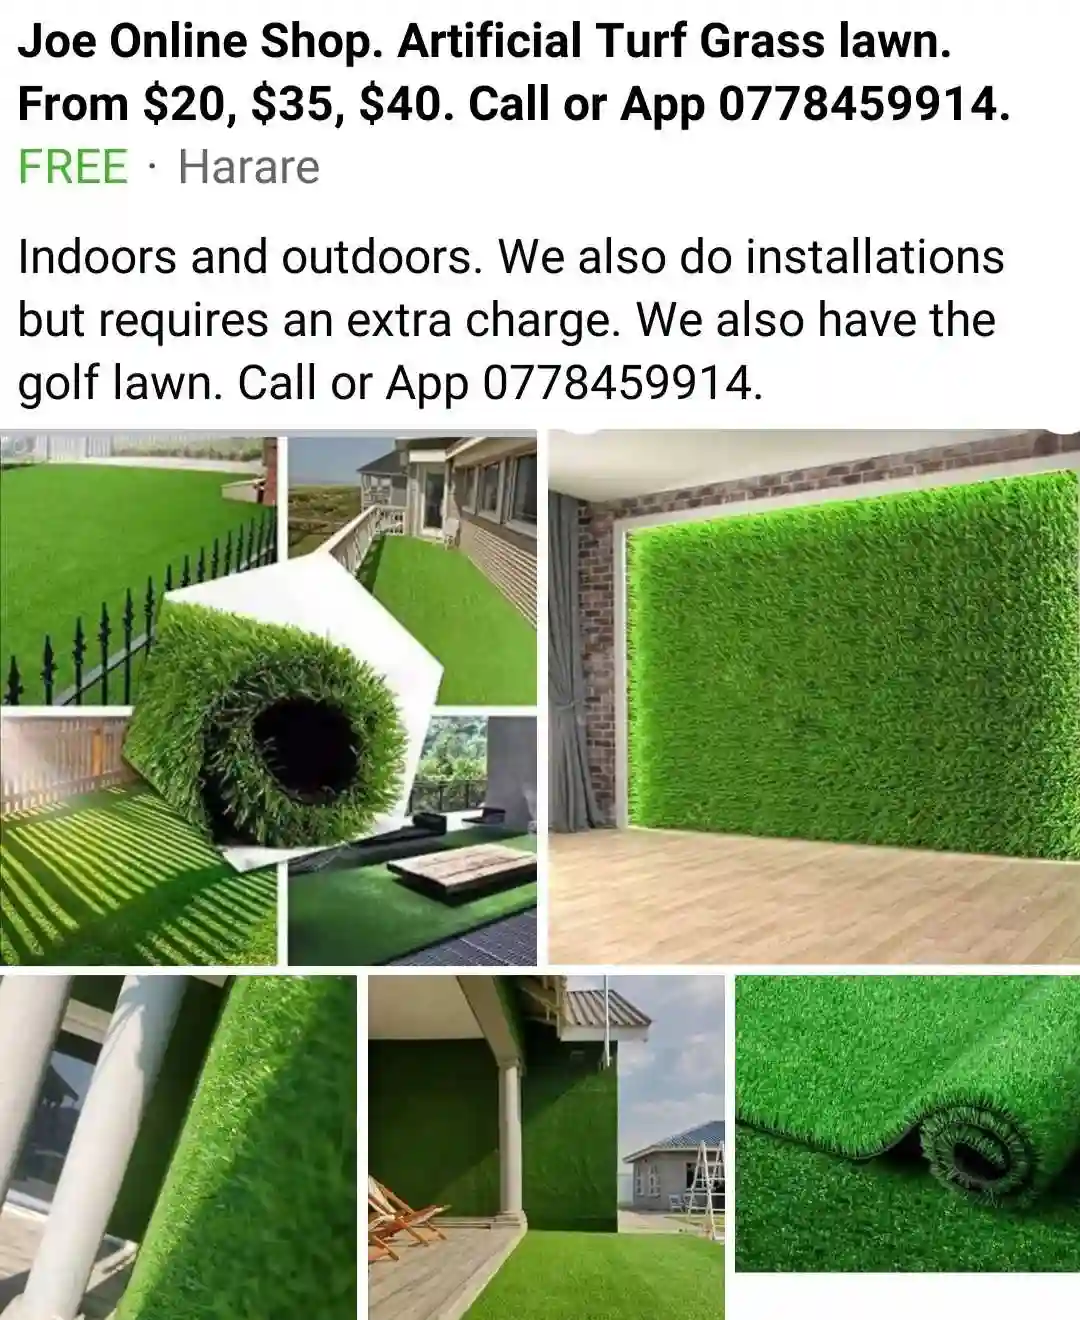 Joe Online Shop. Artificial Turf Grass lawn 